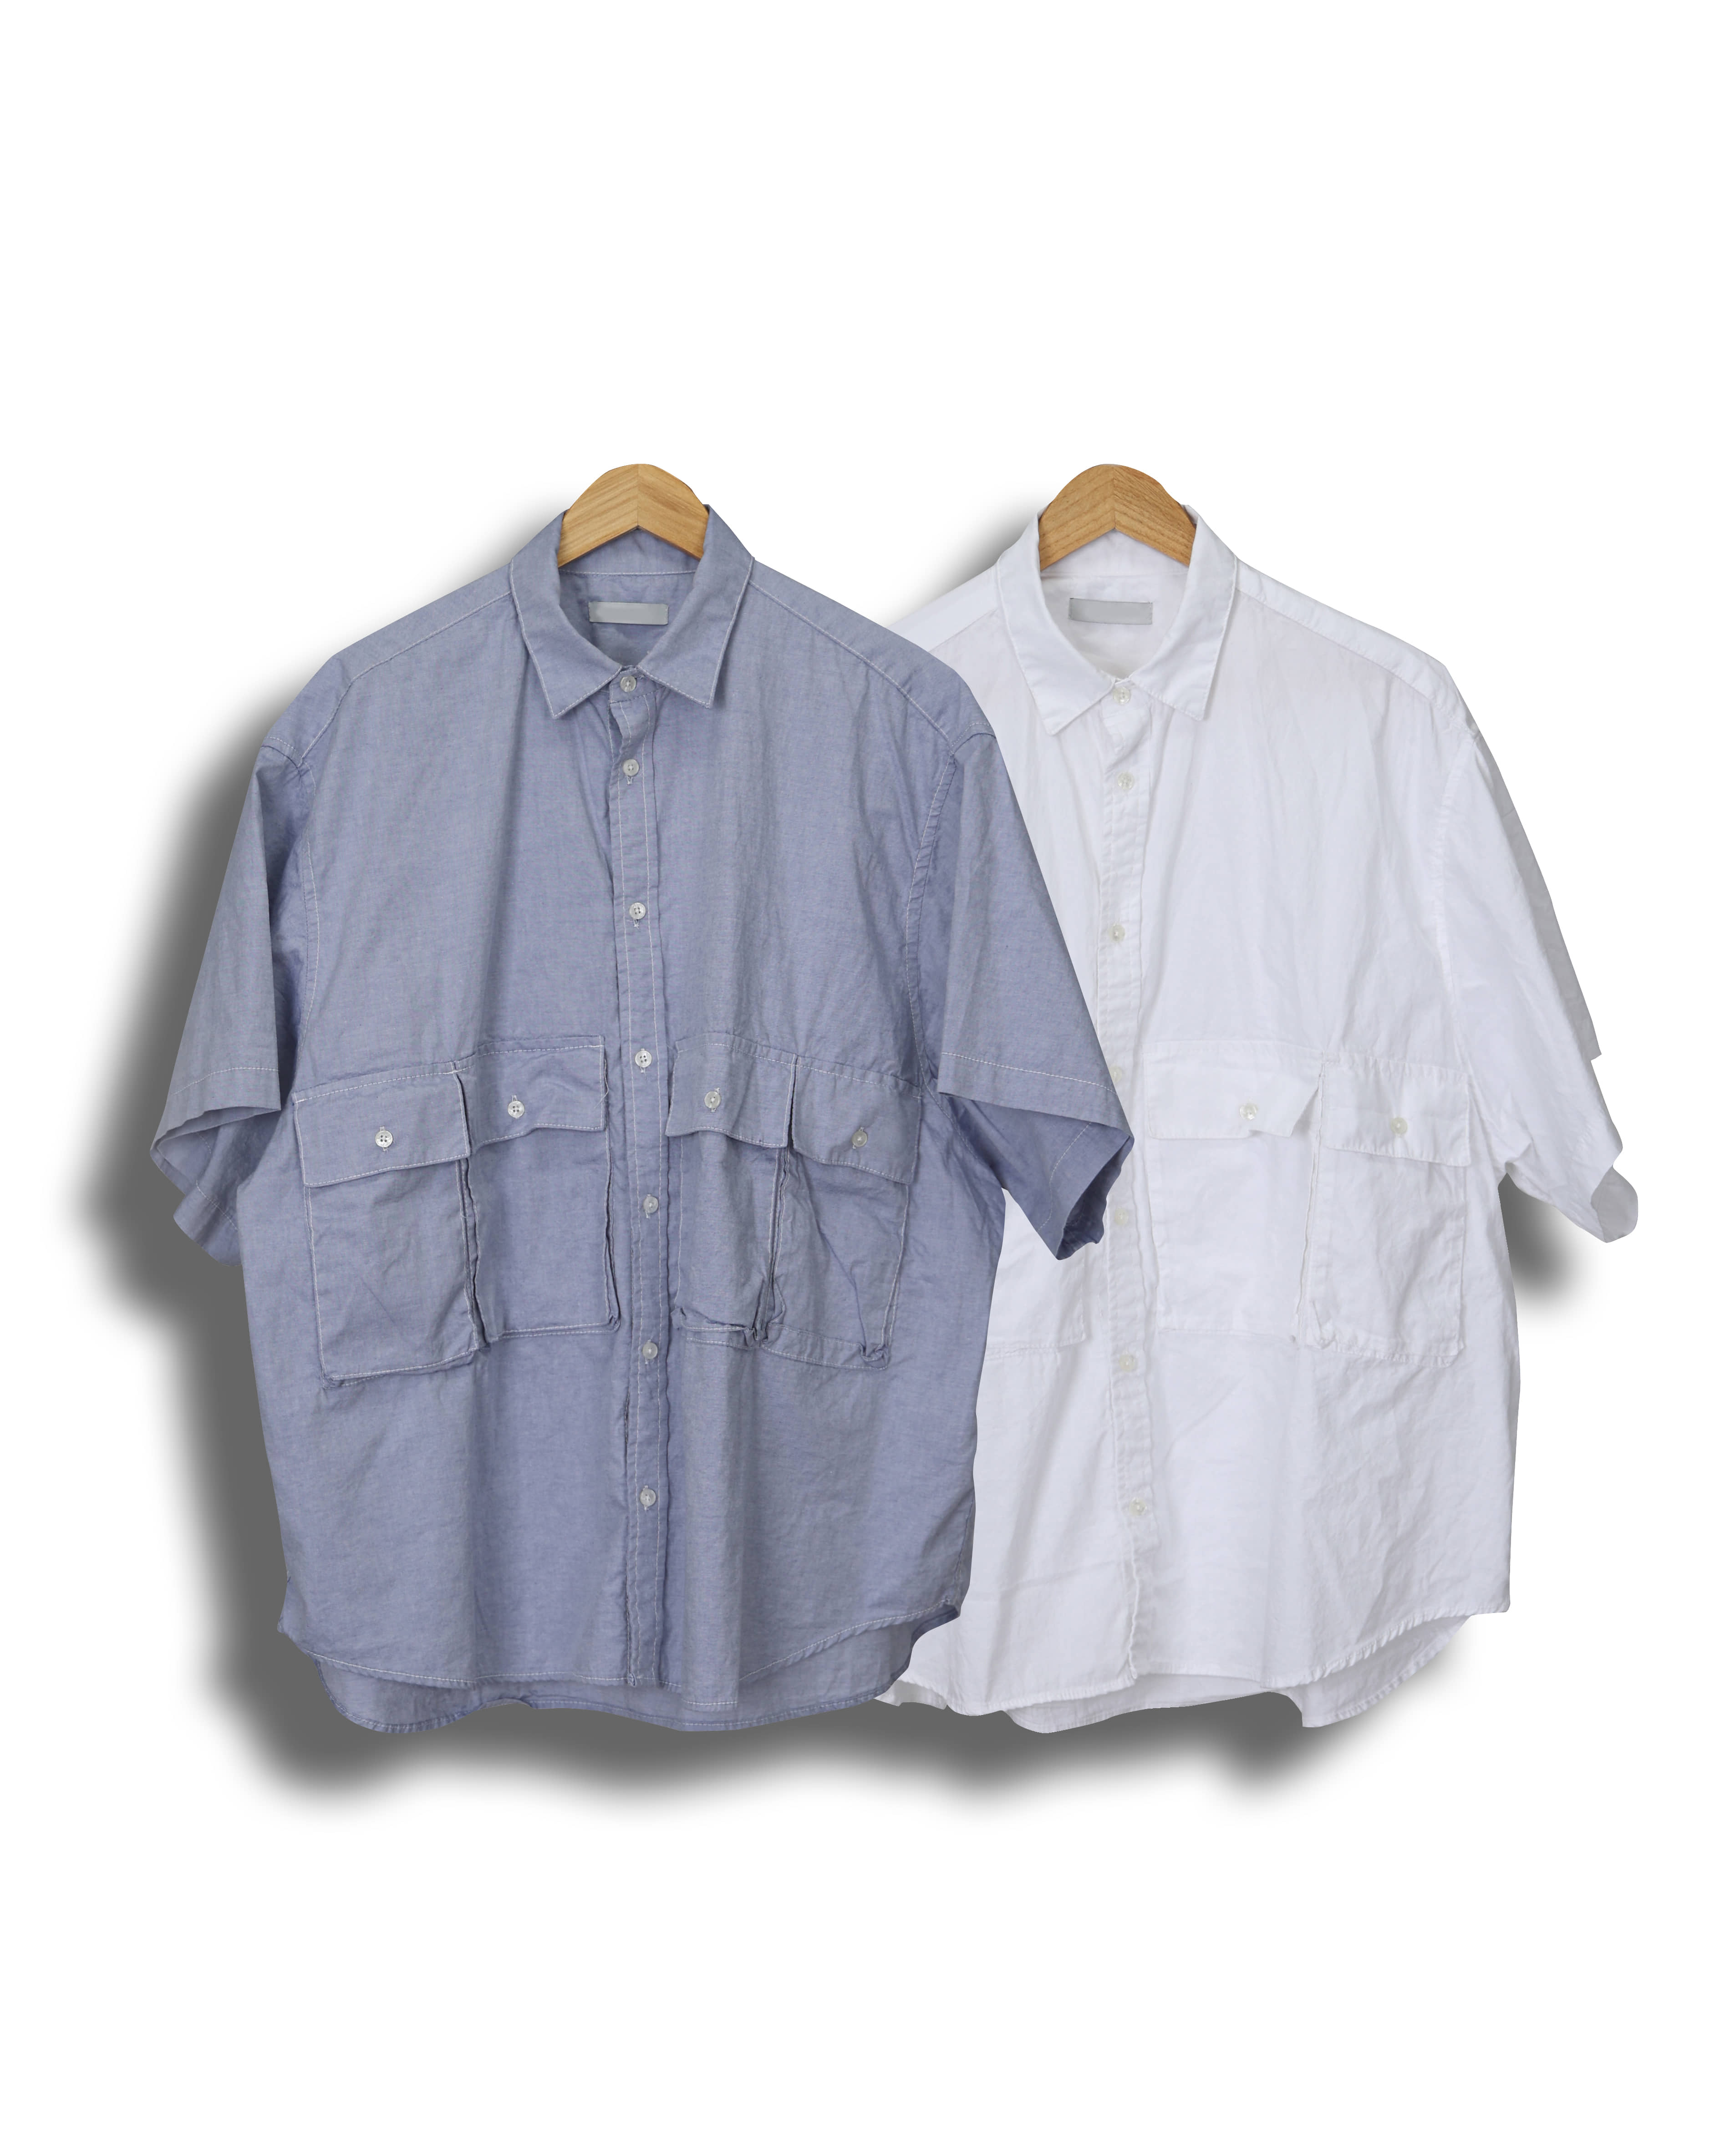 SPEC Pocket Detailing Oversized Half Shirts (Sky Blue/White)